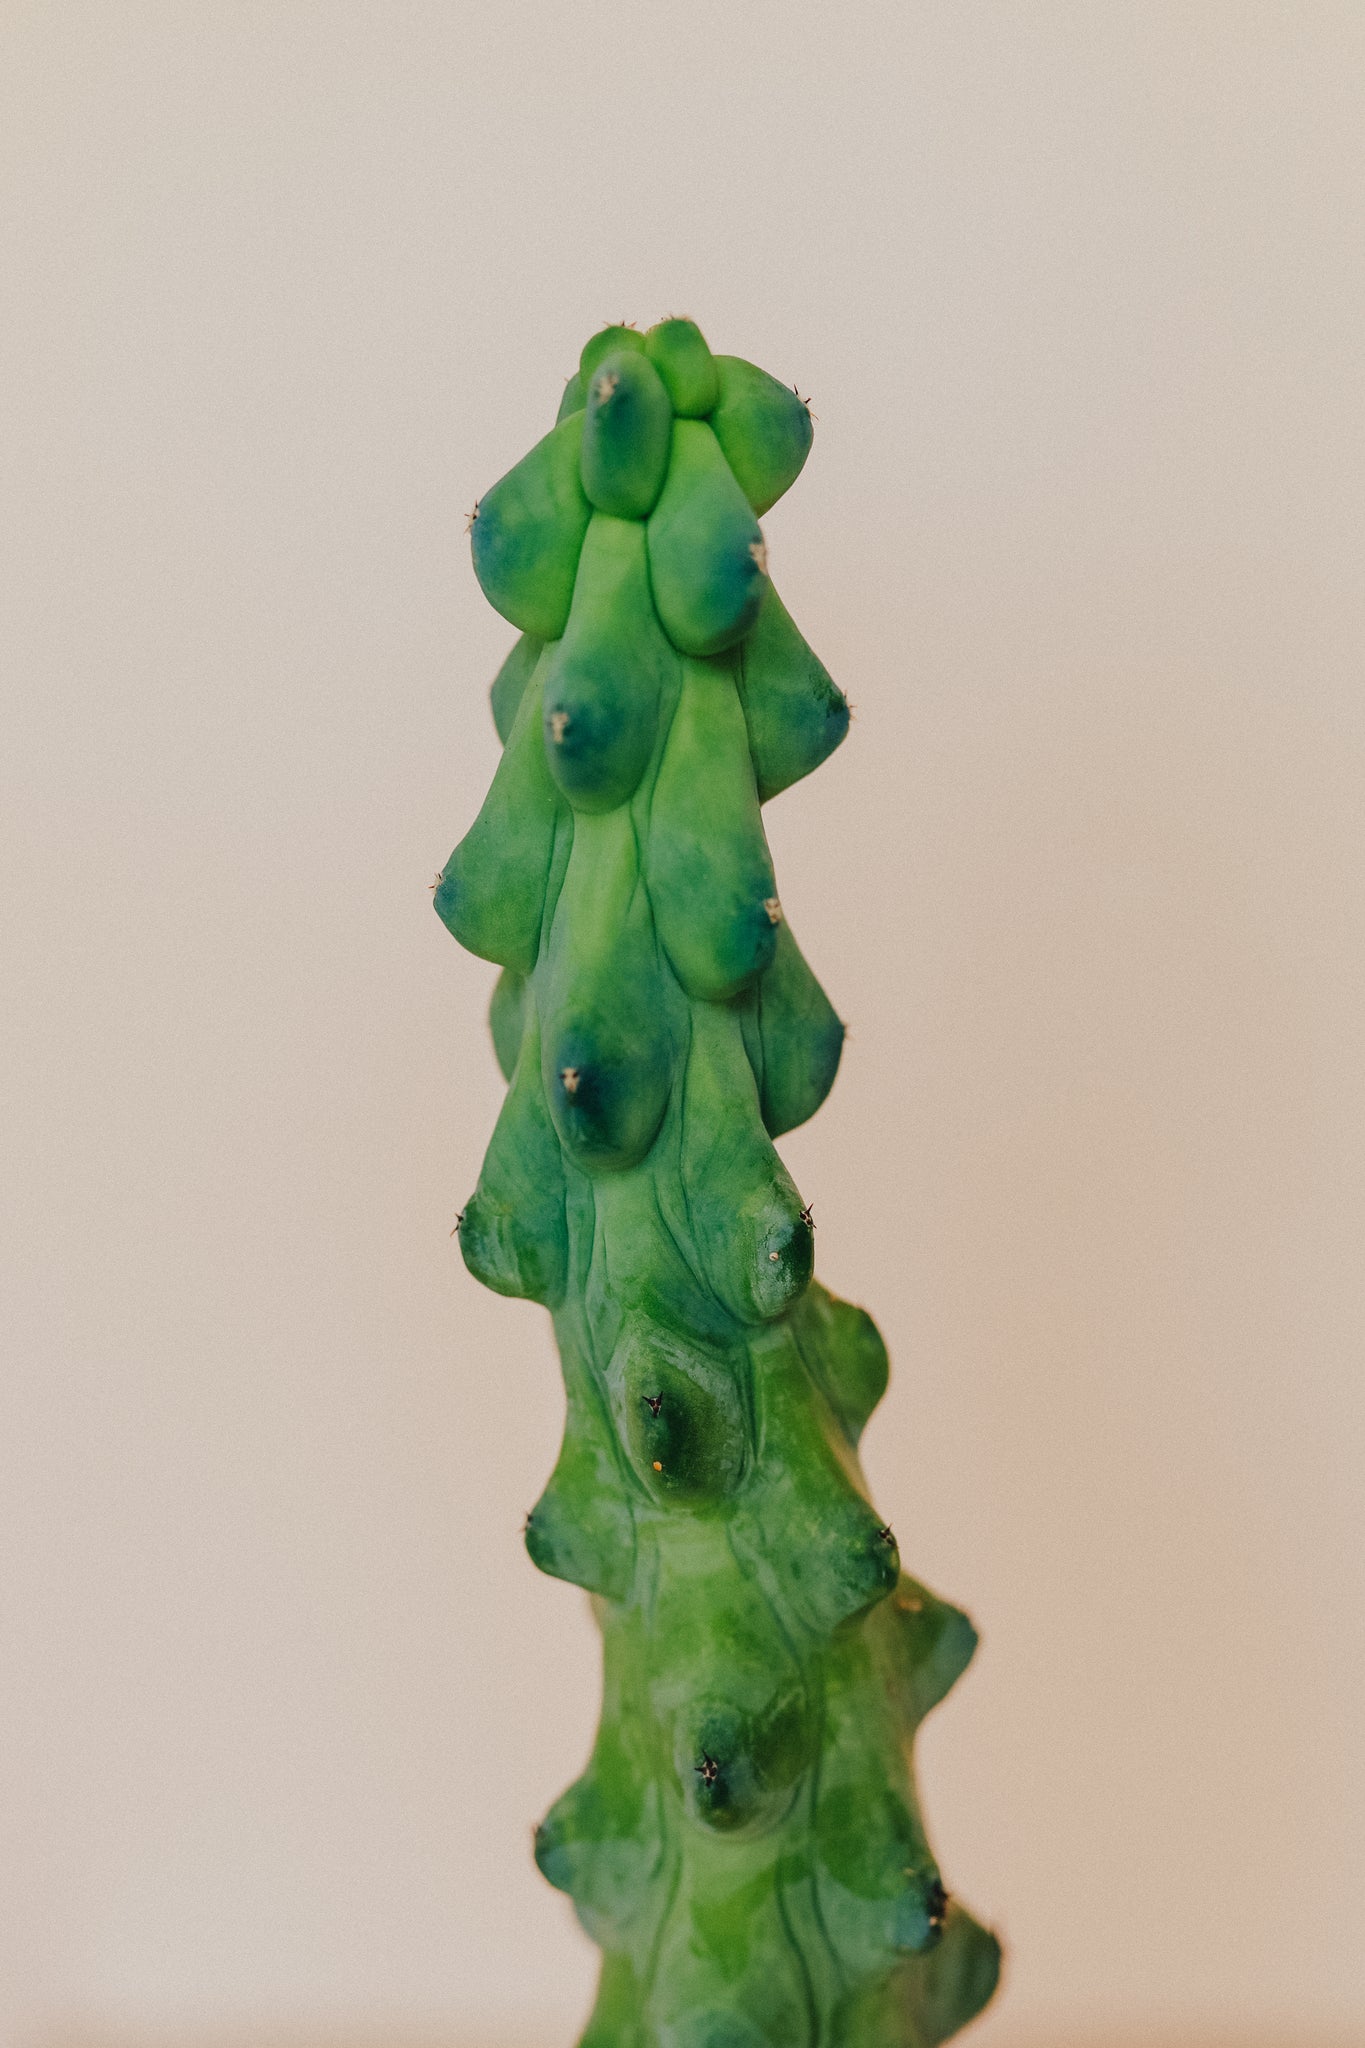 Boobie Cactus - Myrtillocactus Geometrizans 'Fukurokuryuzinboku'